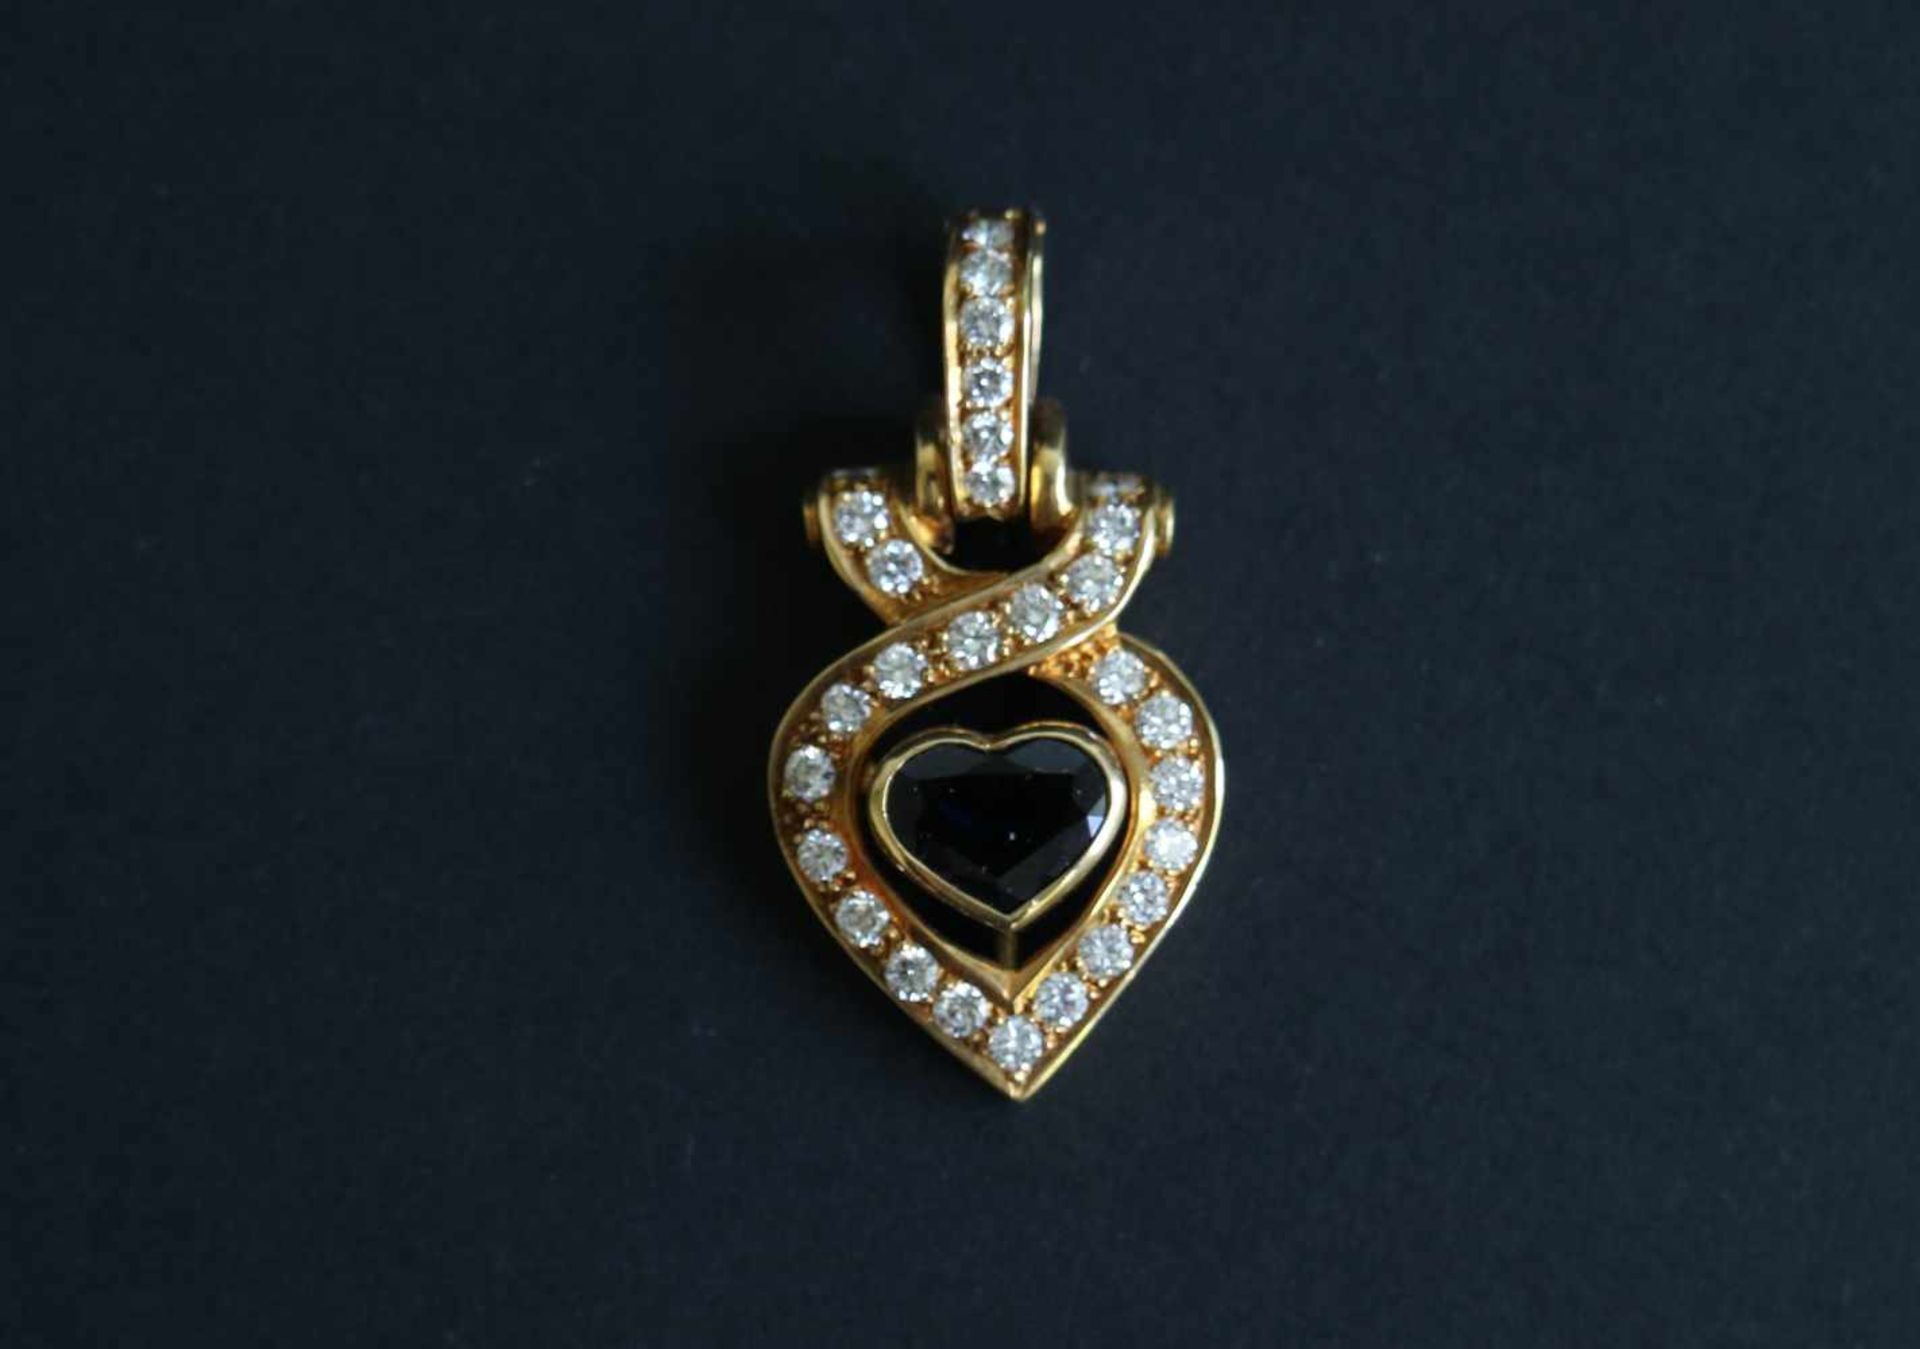 Pendant with blue sapphire 1.1 carat diamond, gold 18 Kt, quality VS / F-G